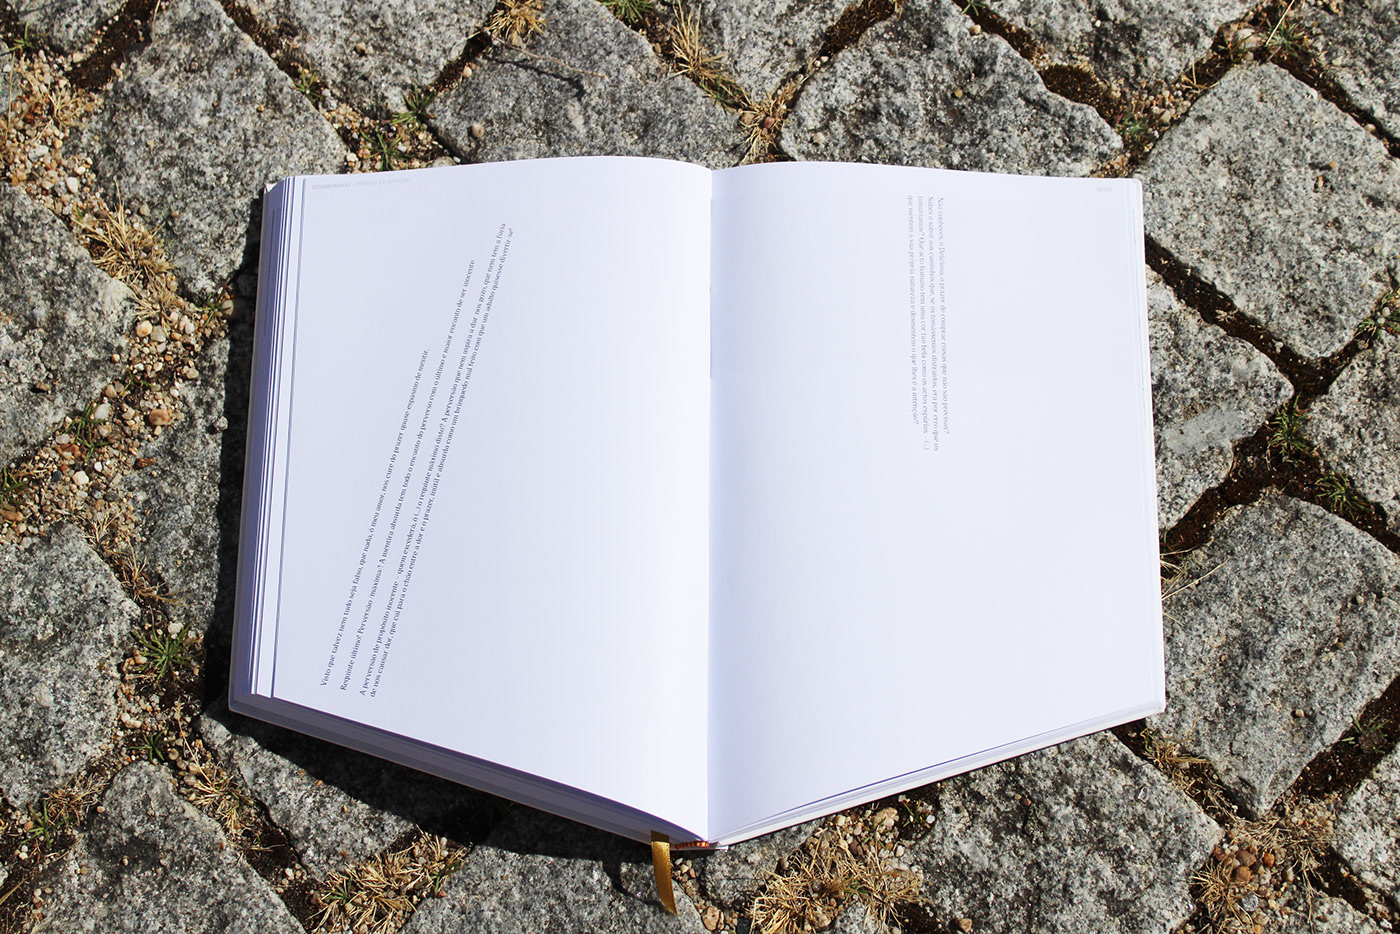 desassossego discomfort feelings wandering White book editorial Livro design graphic design 